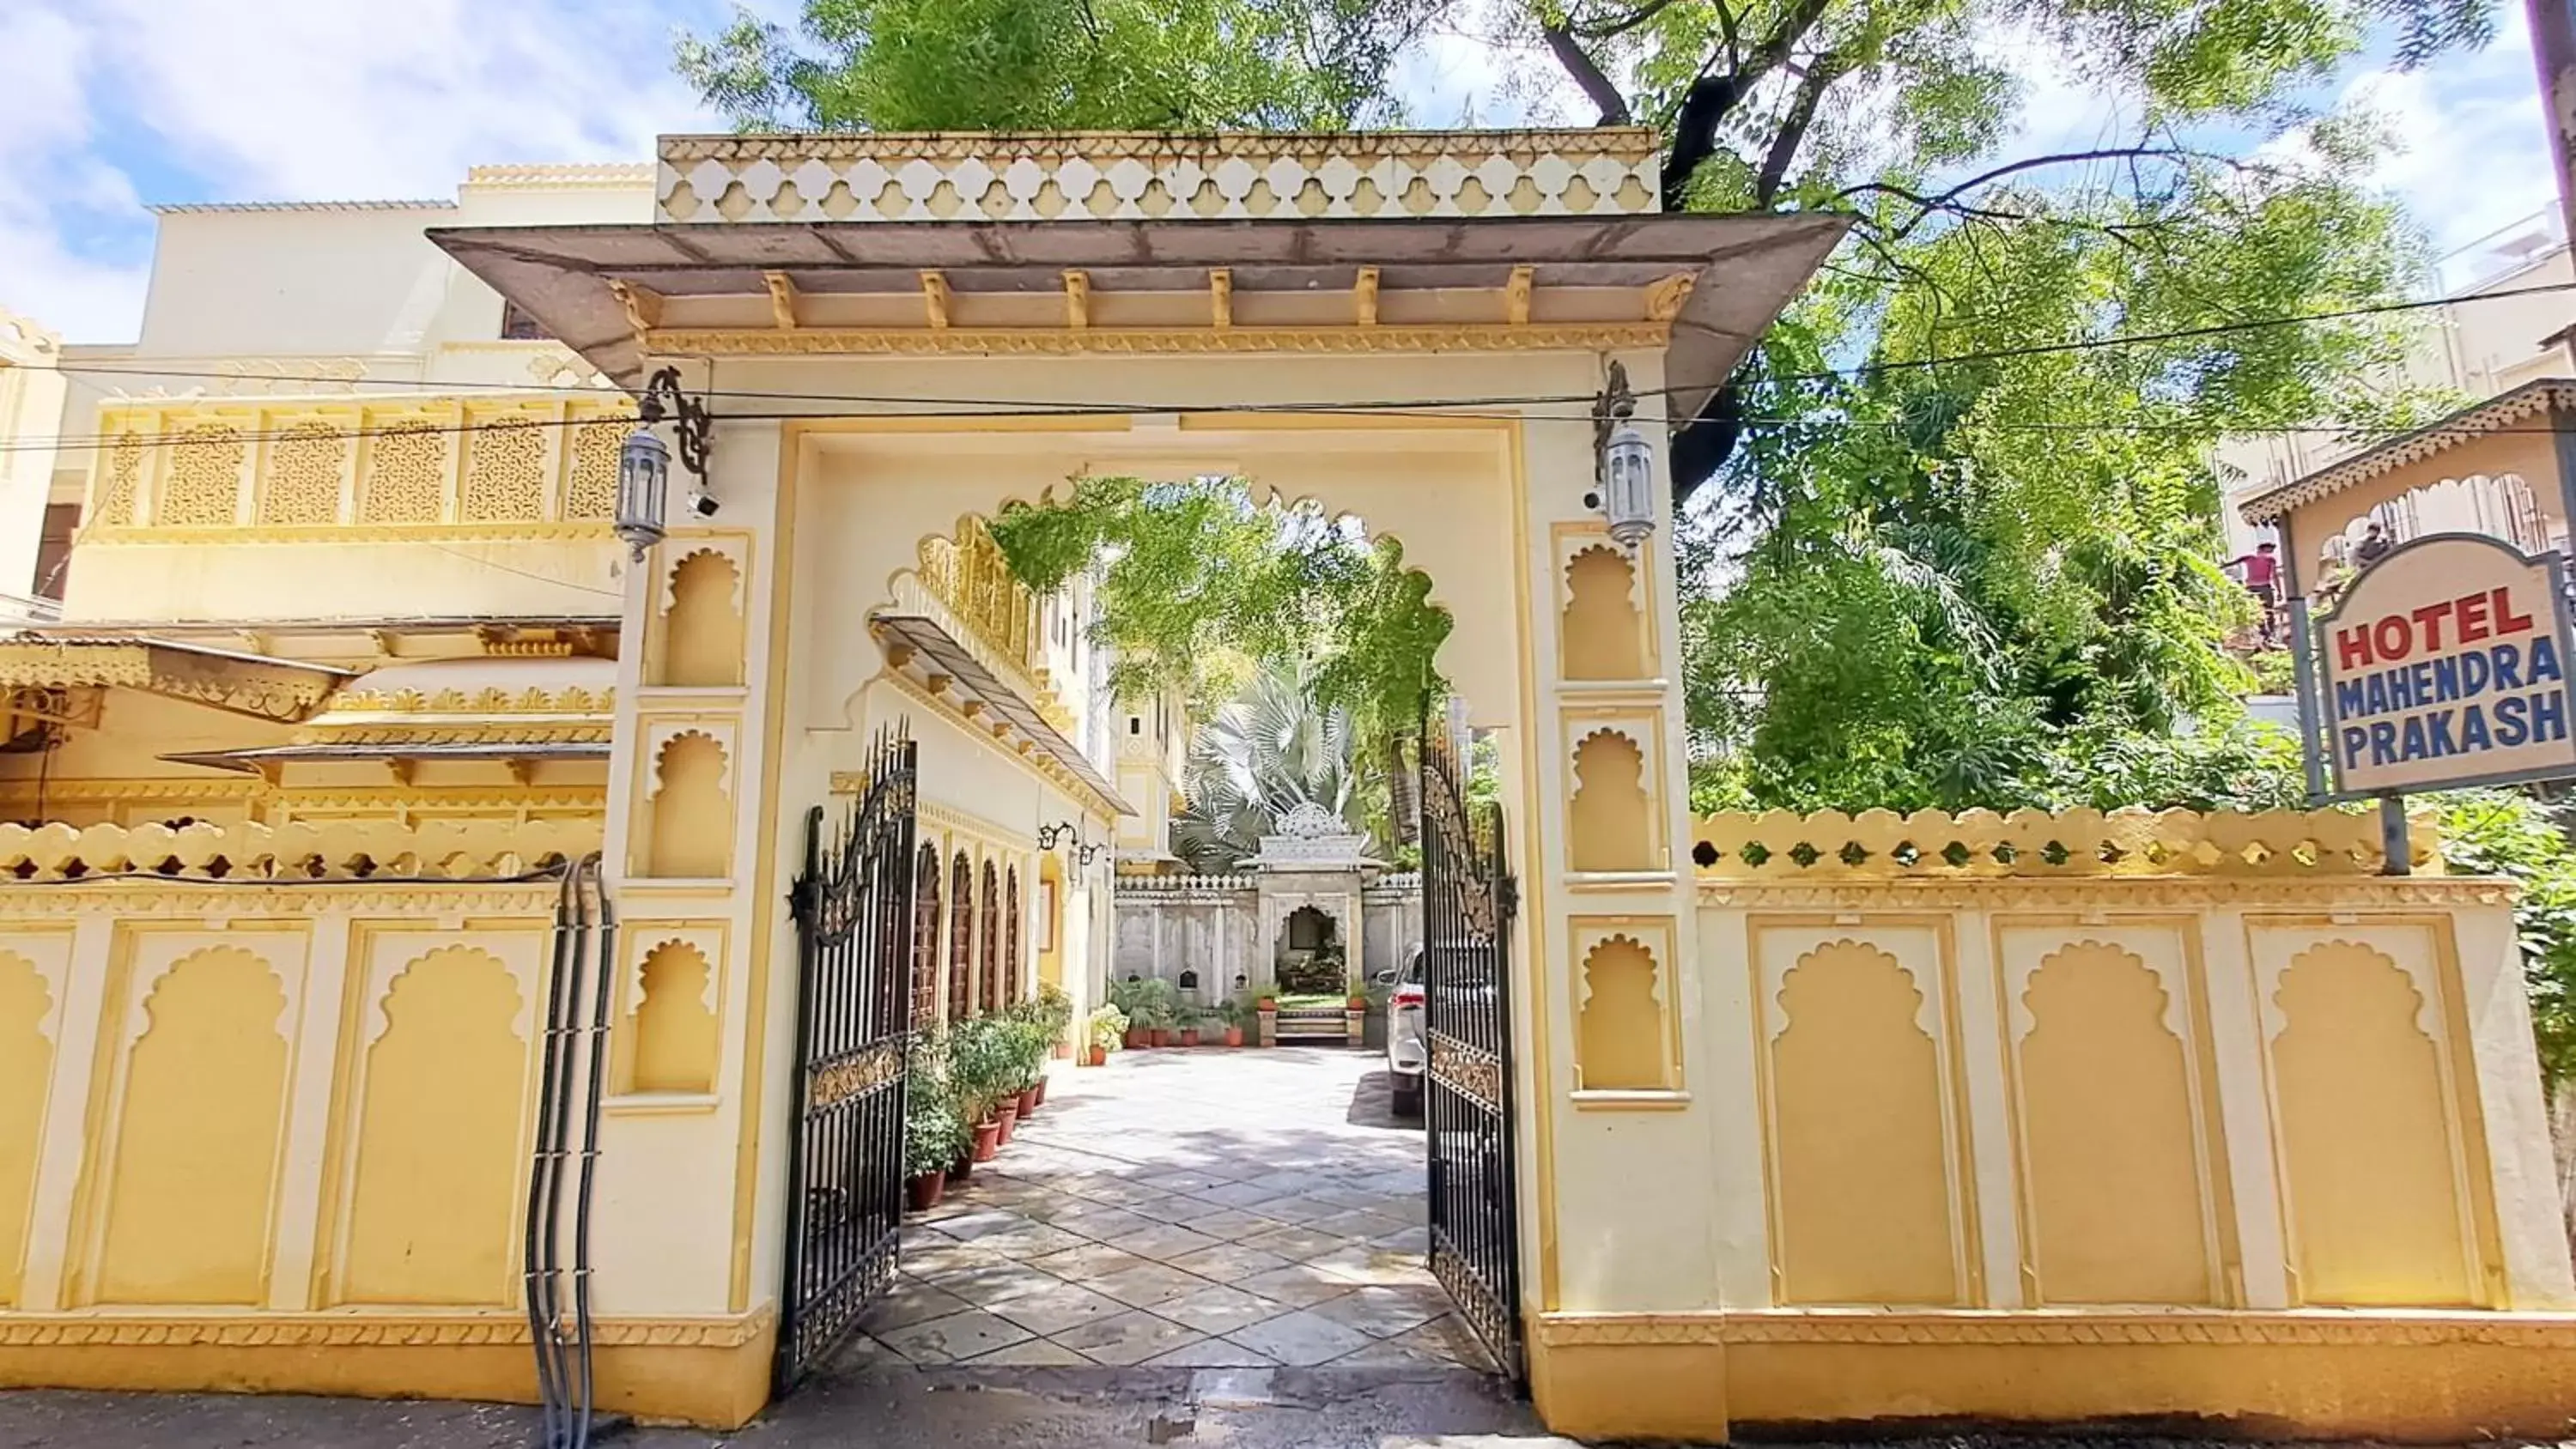 Facade/entrance in Mahendra Prakash